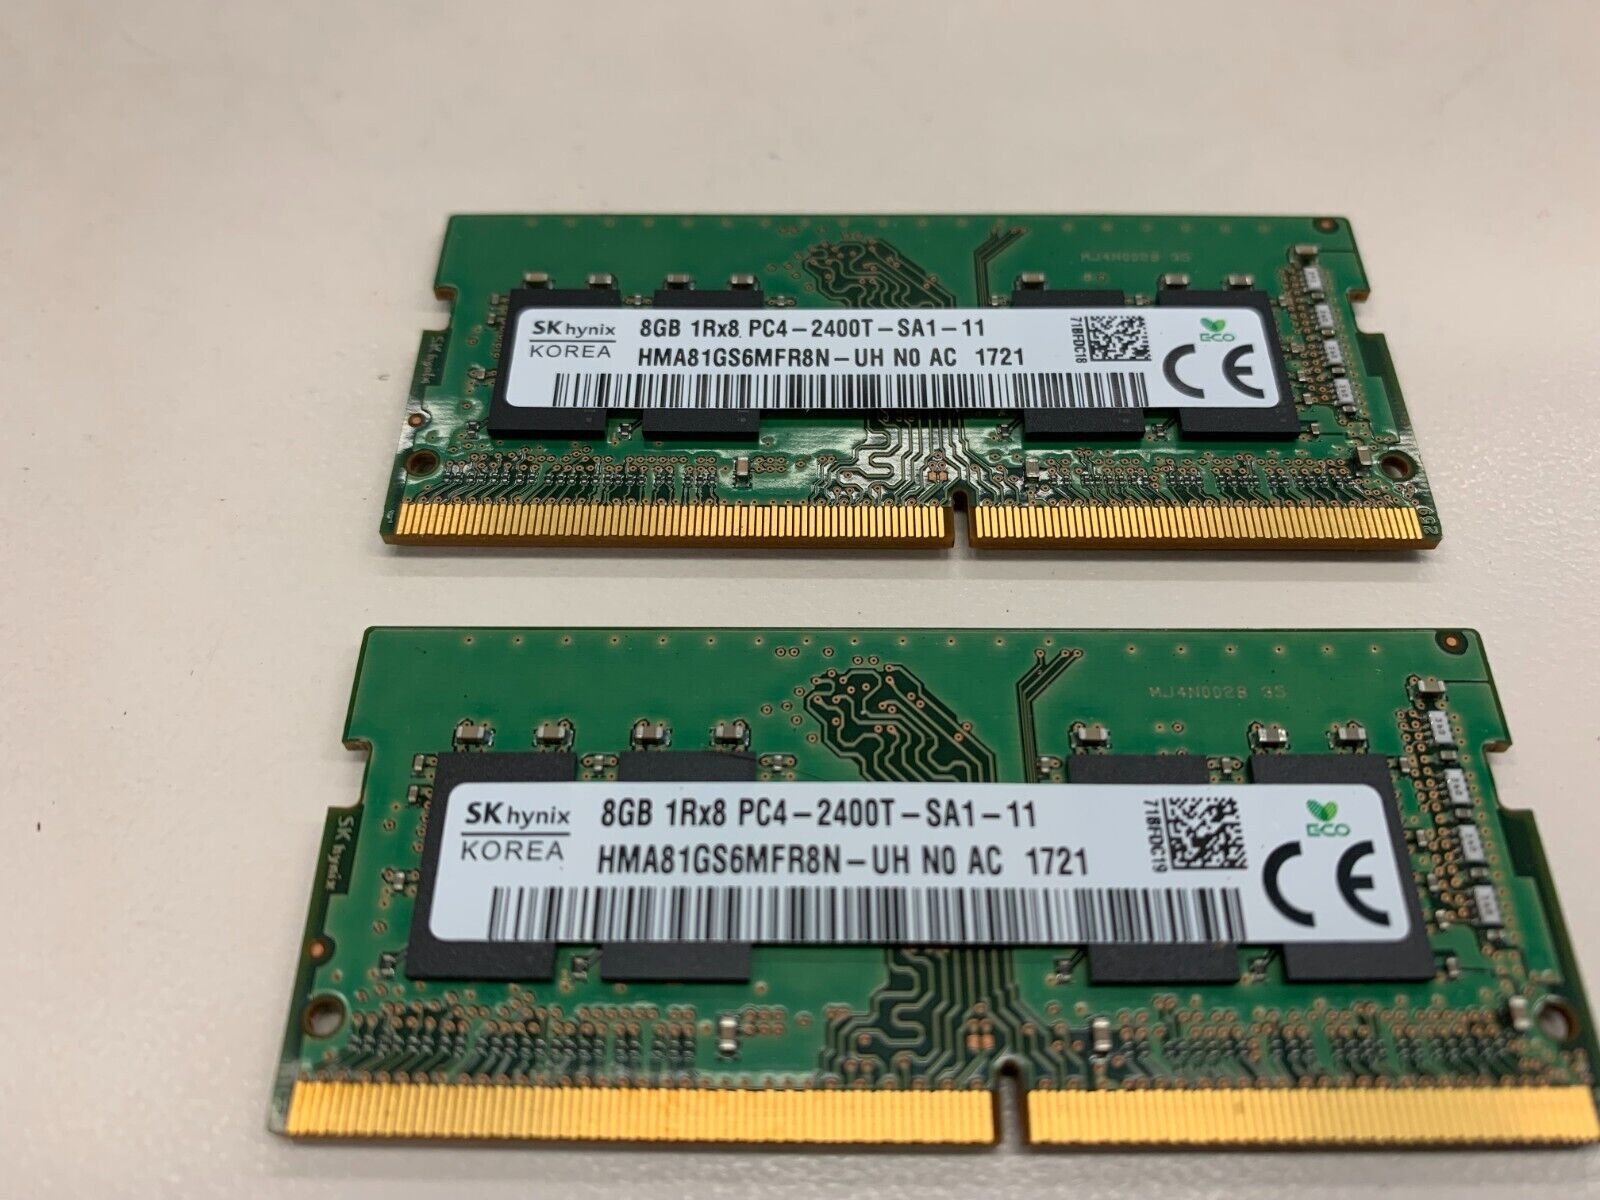 16GB 2 Sticks of SK Hynix 8GB PC4-2400T-SA1-11 DDR4 Laptop Memory